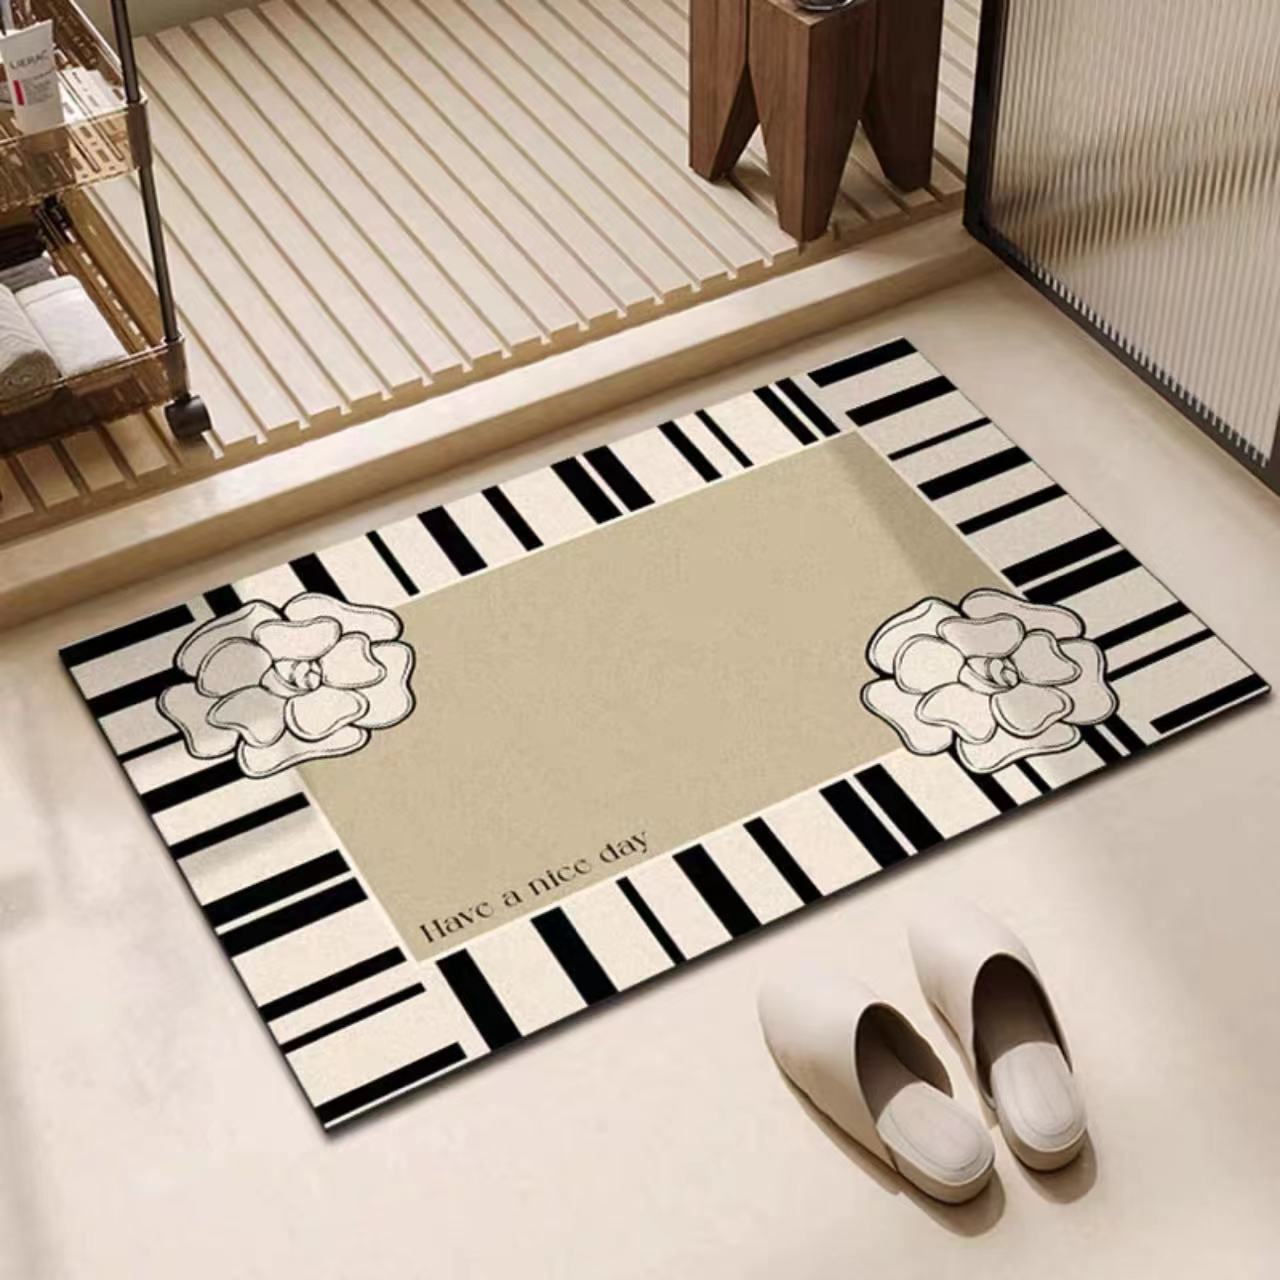 Xiaoxiangfeng bathroom toilet absorbent floor mat French bathroom carpet soft diatom mud toilet mat non-slip floor mat